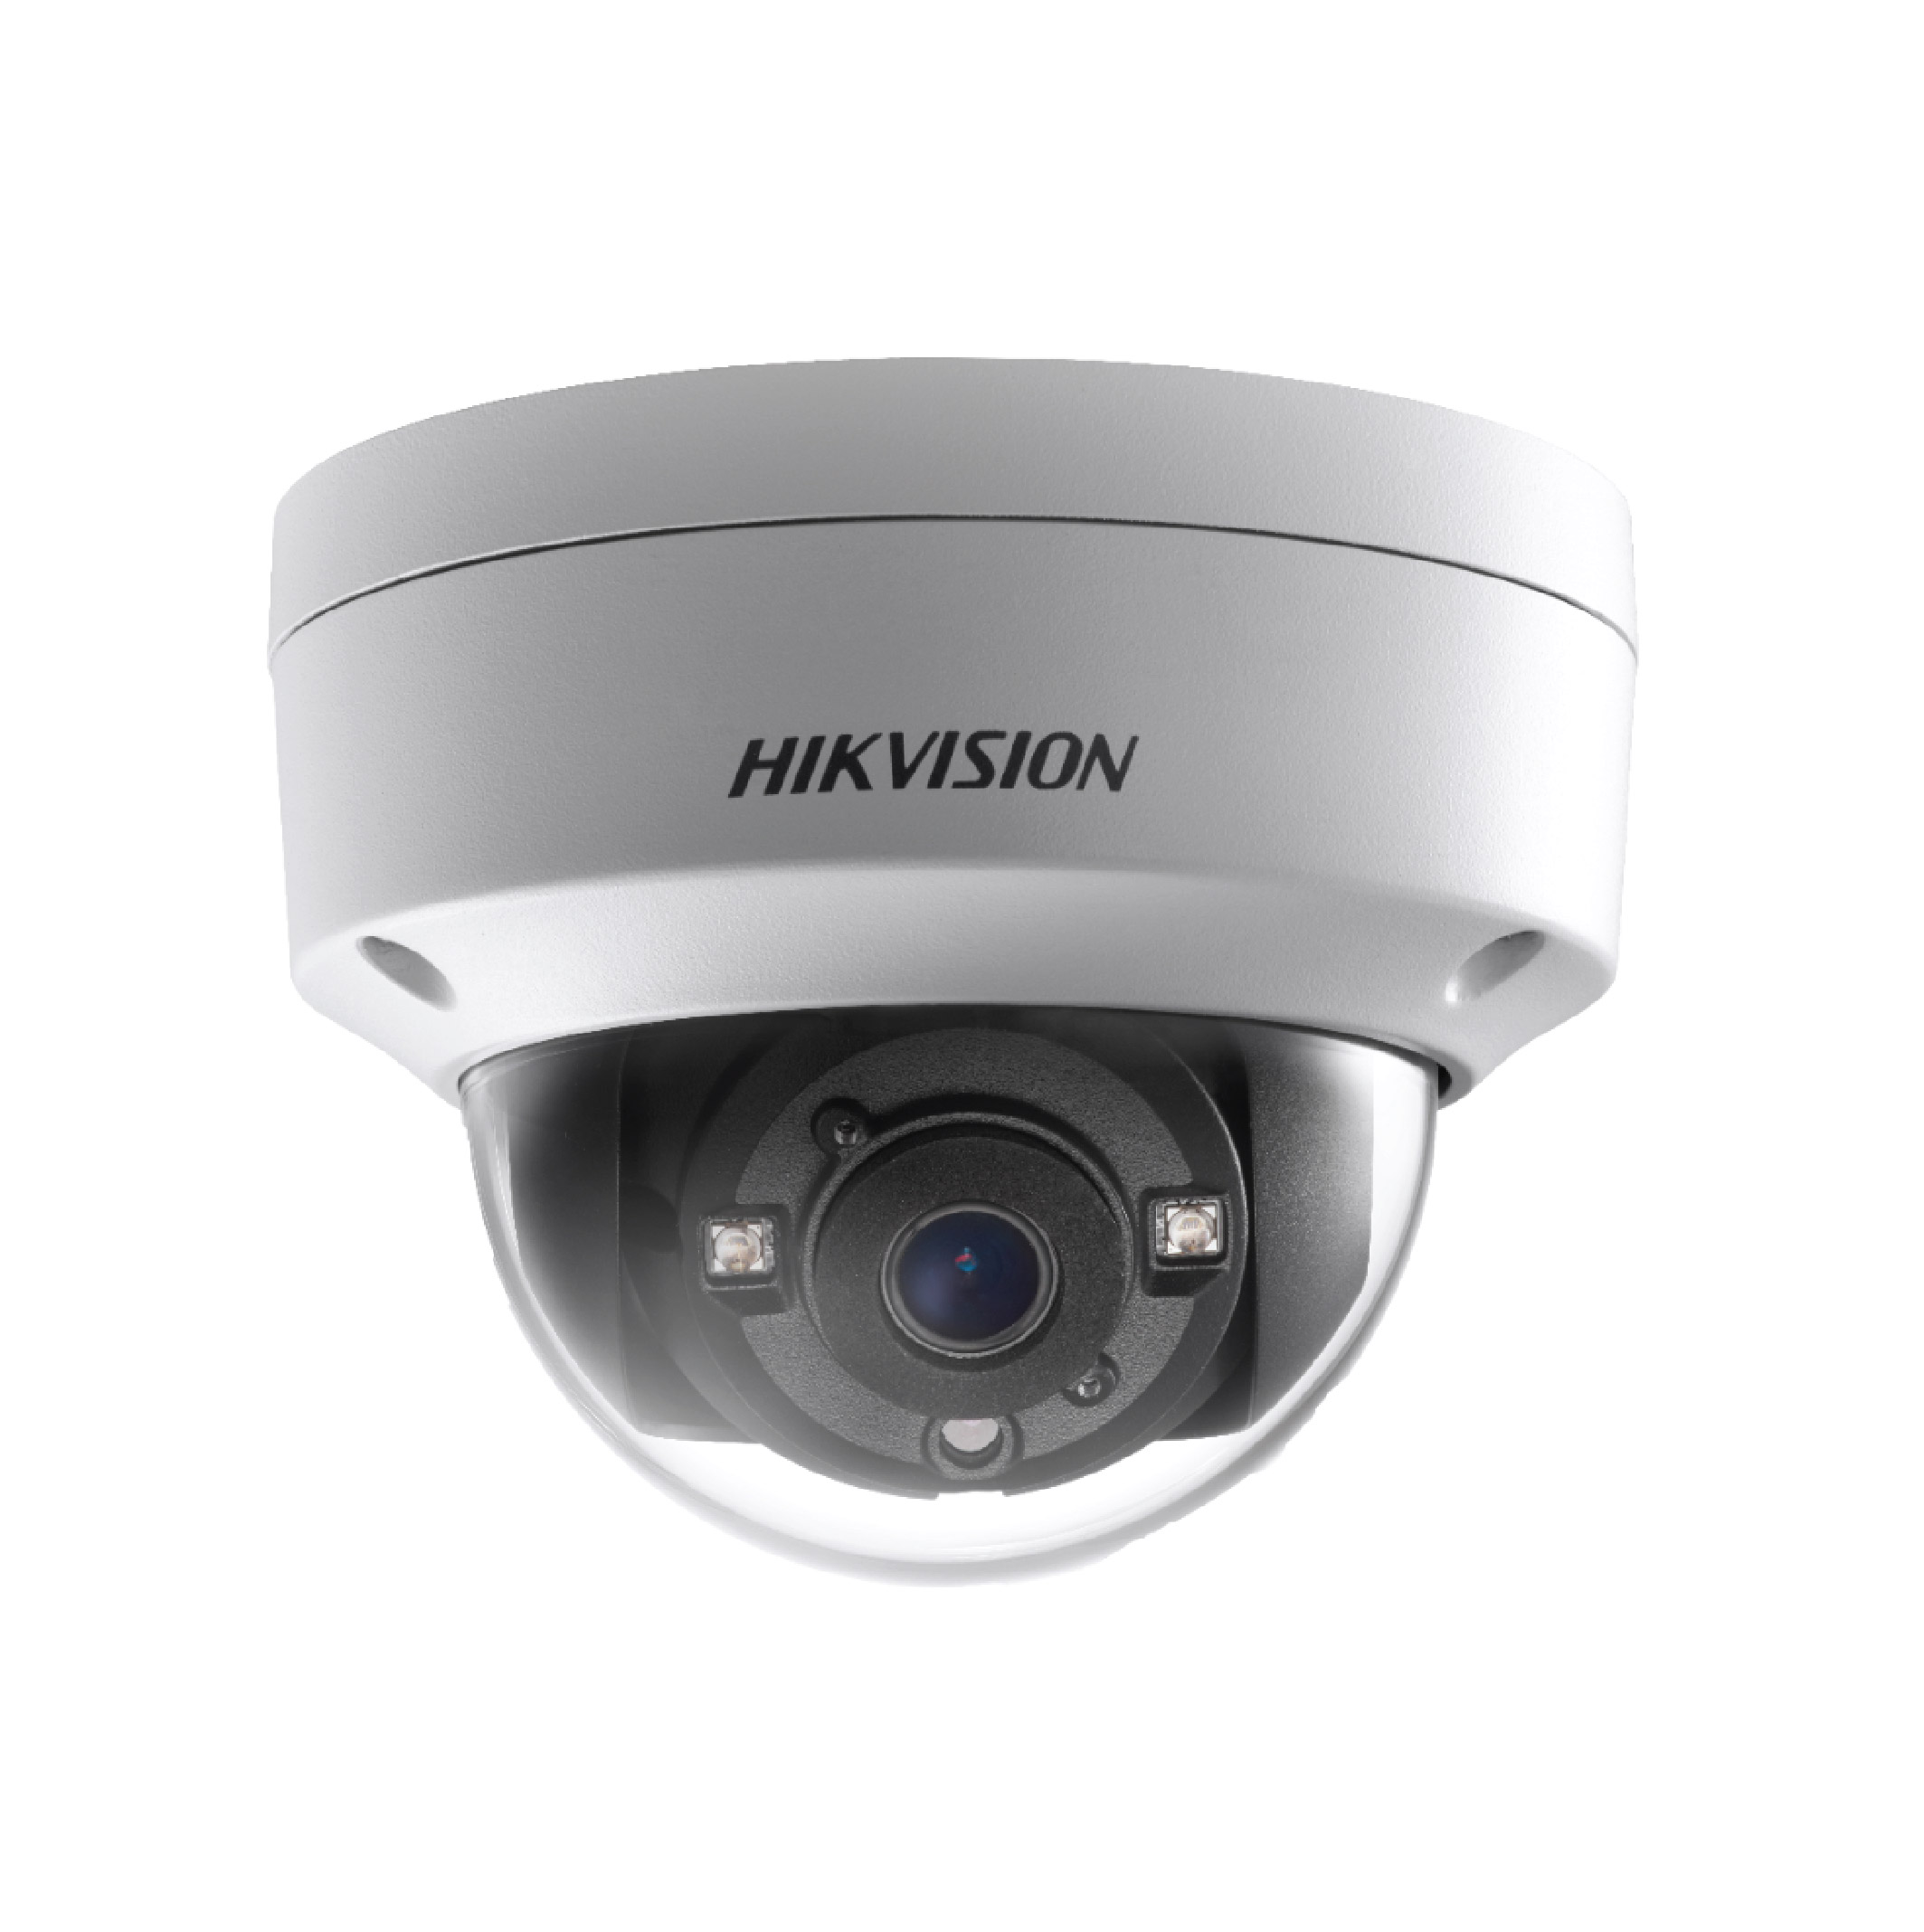 HIKVISION DS-2CE56D8T-VPITF Turbo HD Camera